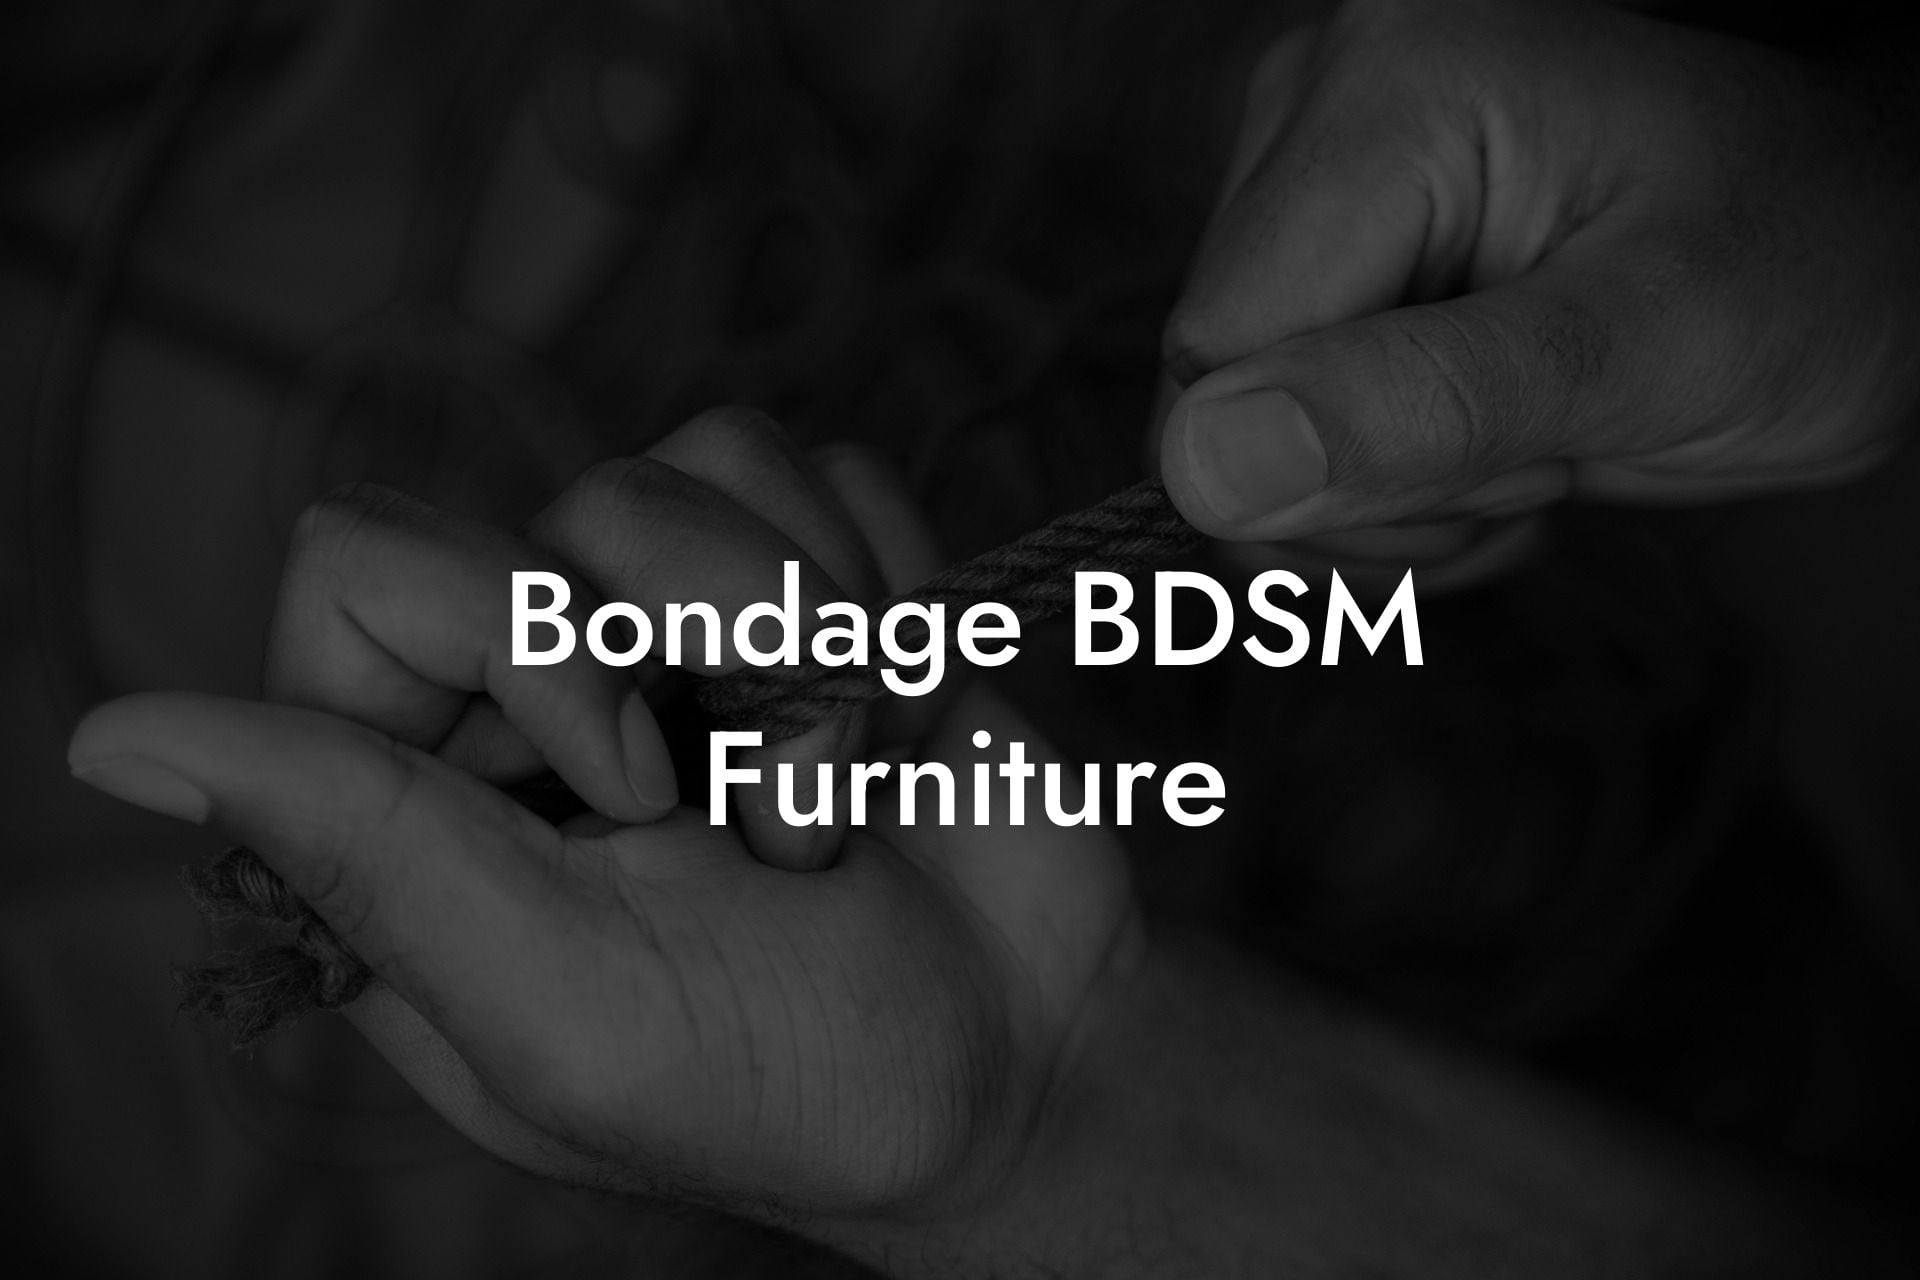 Bondage BDSM Furniture